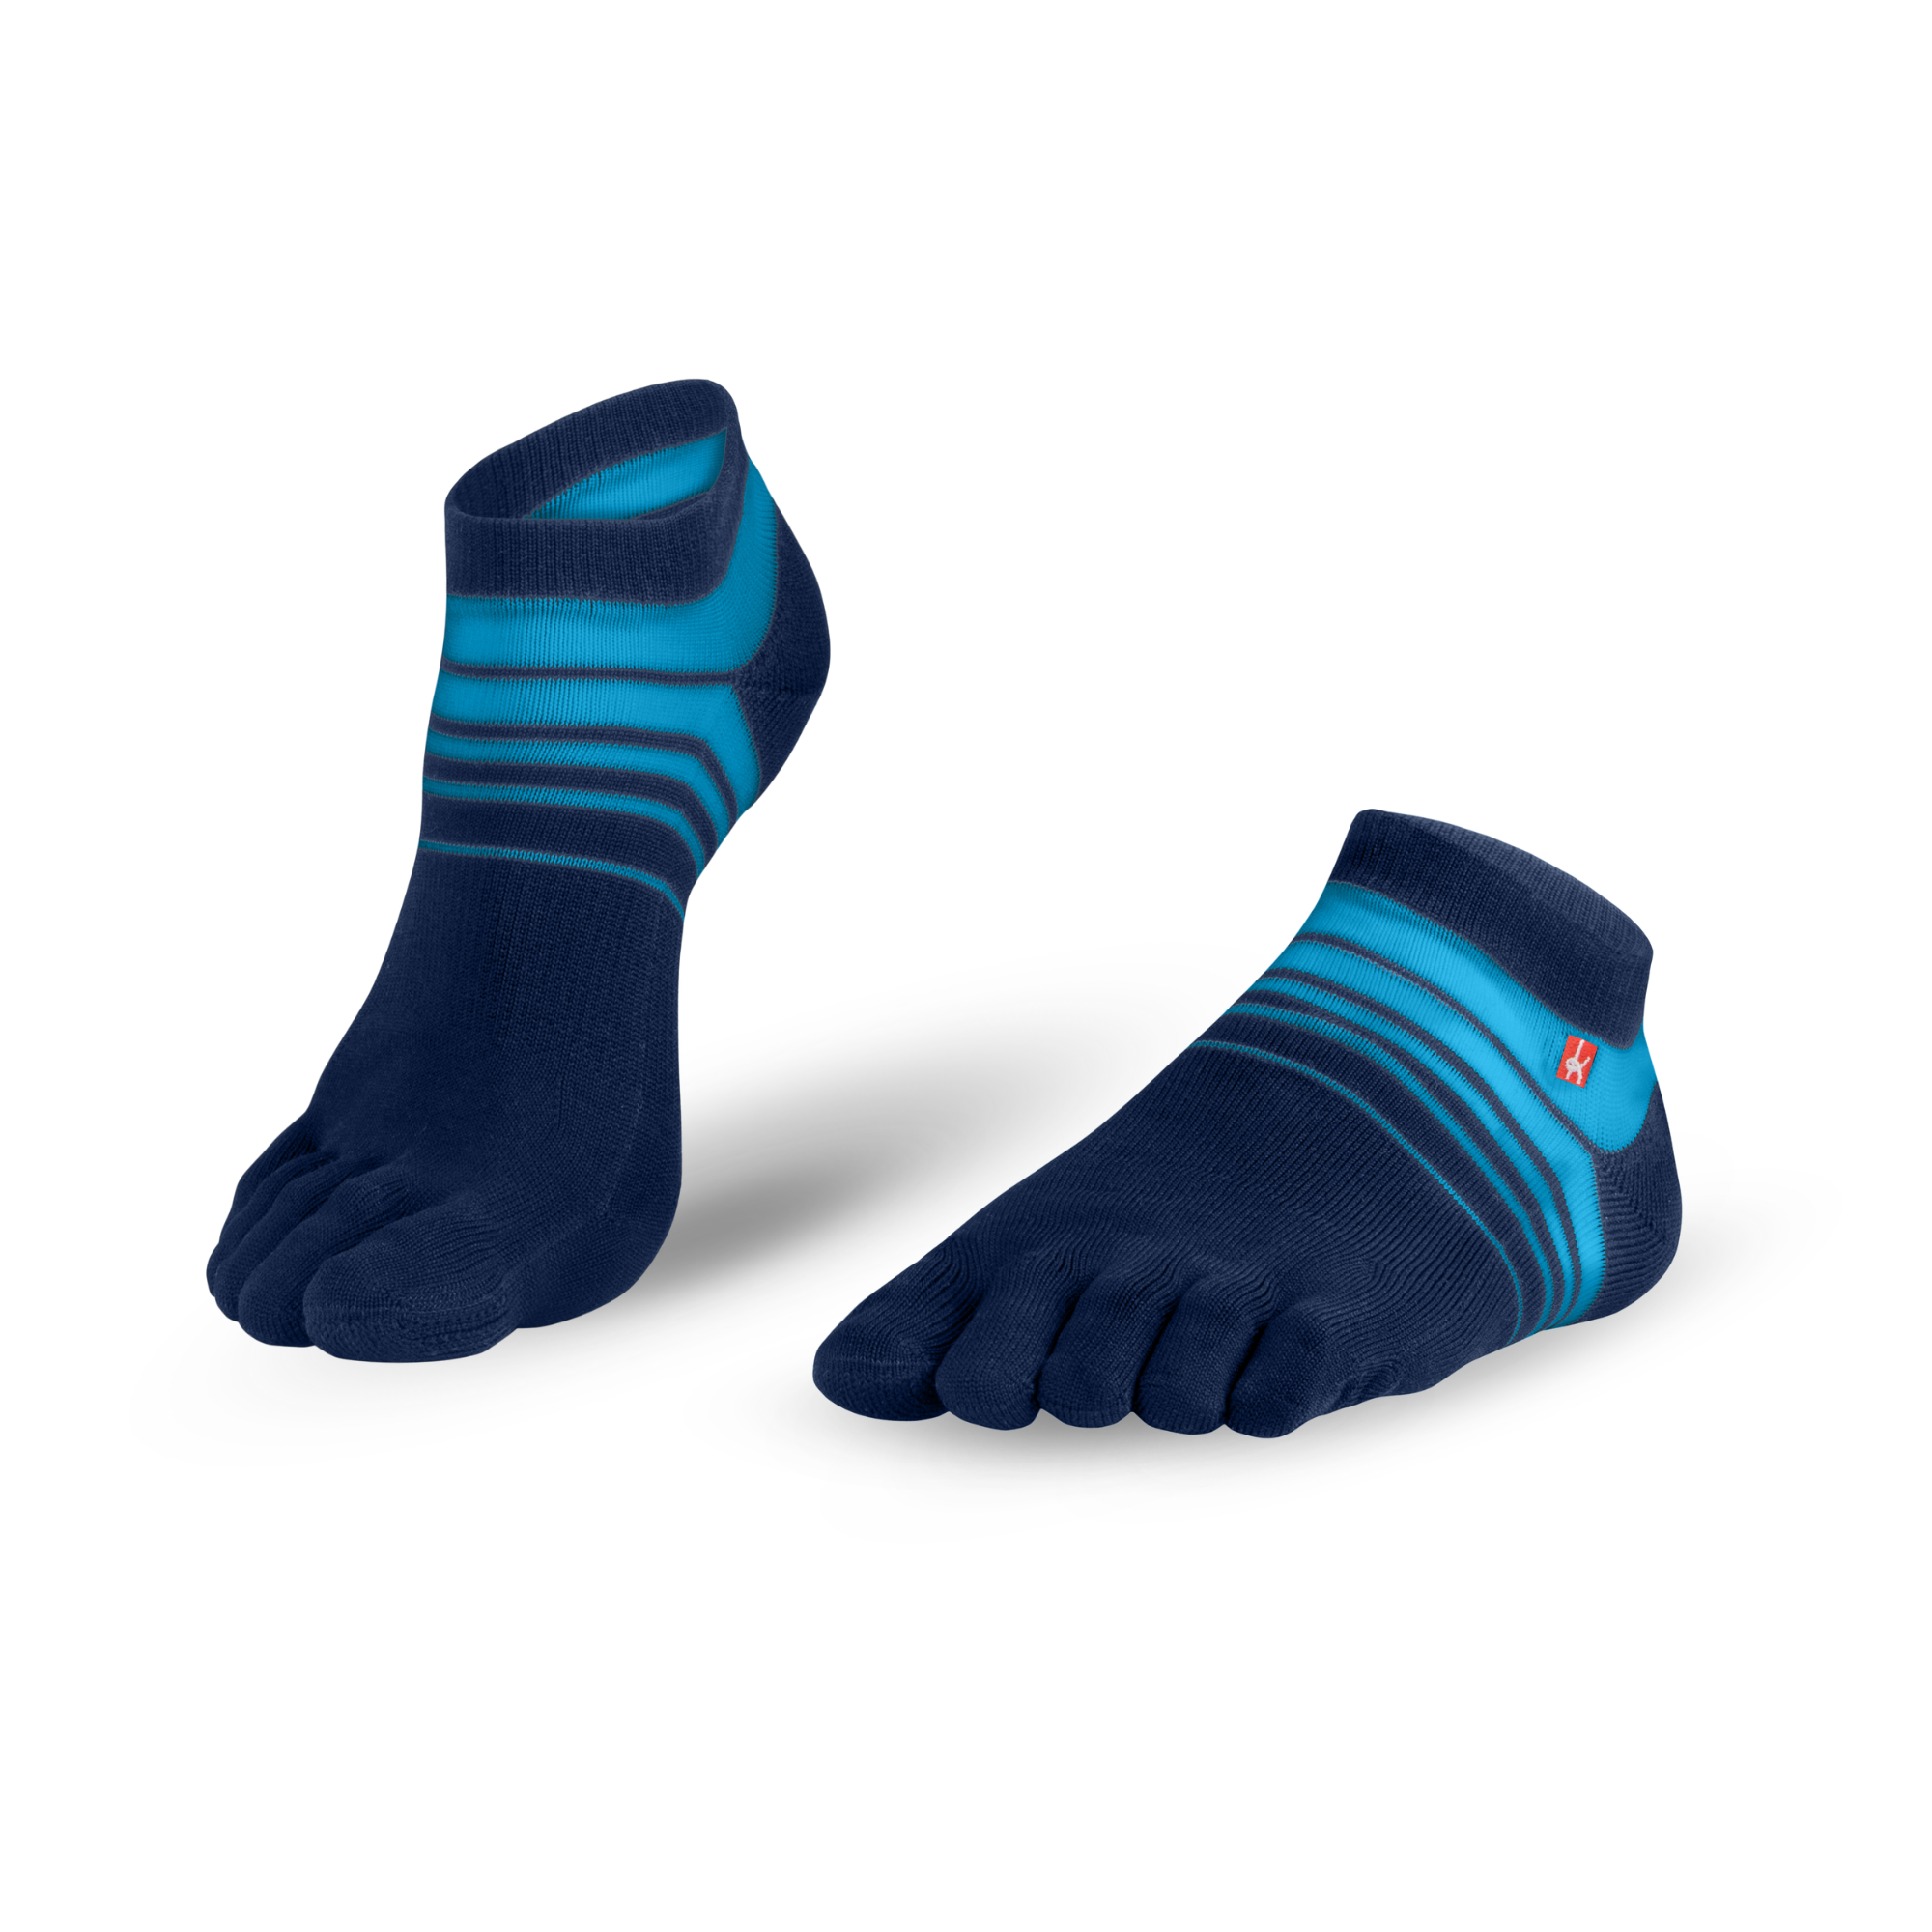 Outdoor toe socks - Knitido®